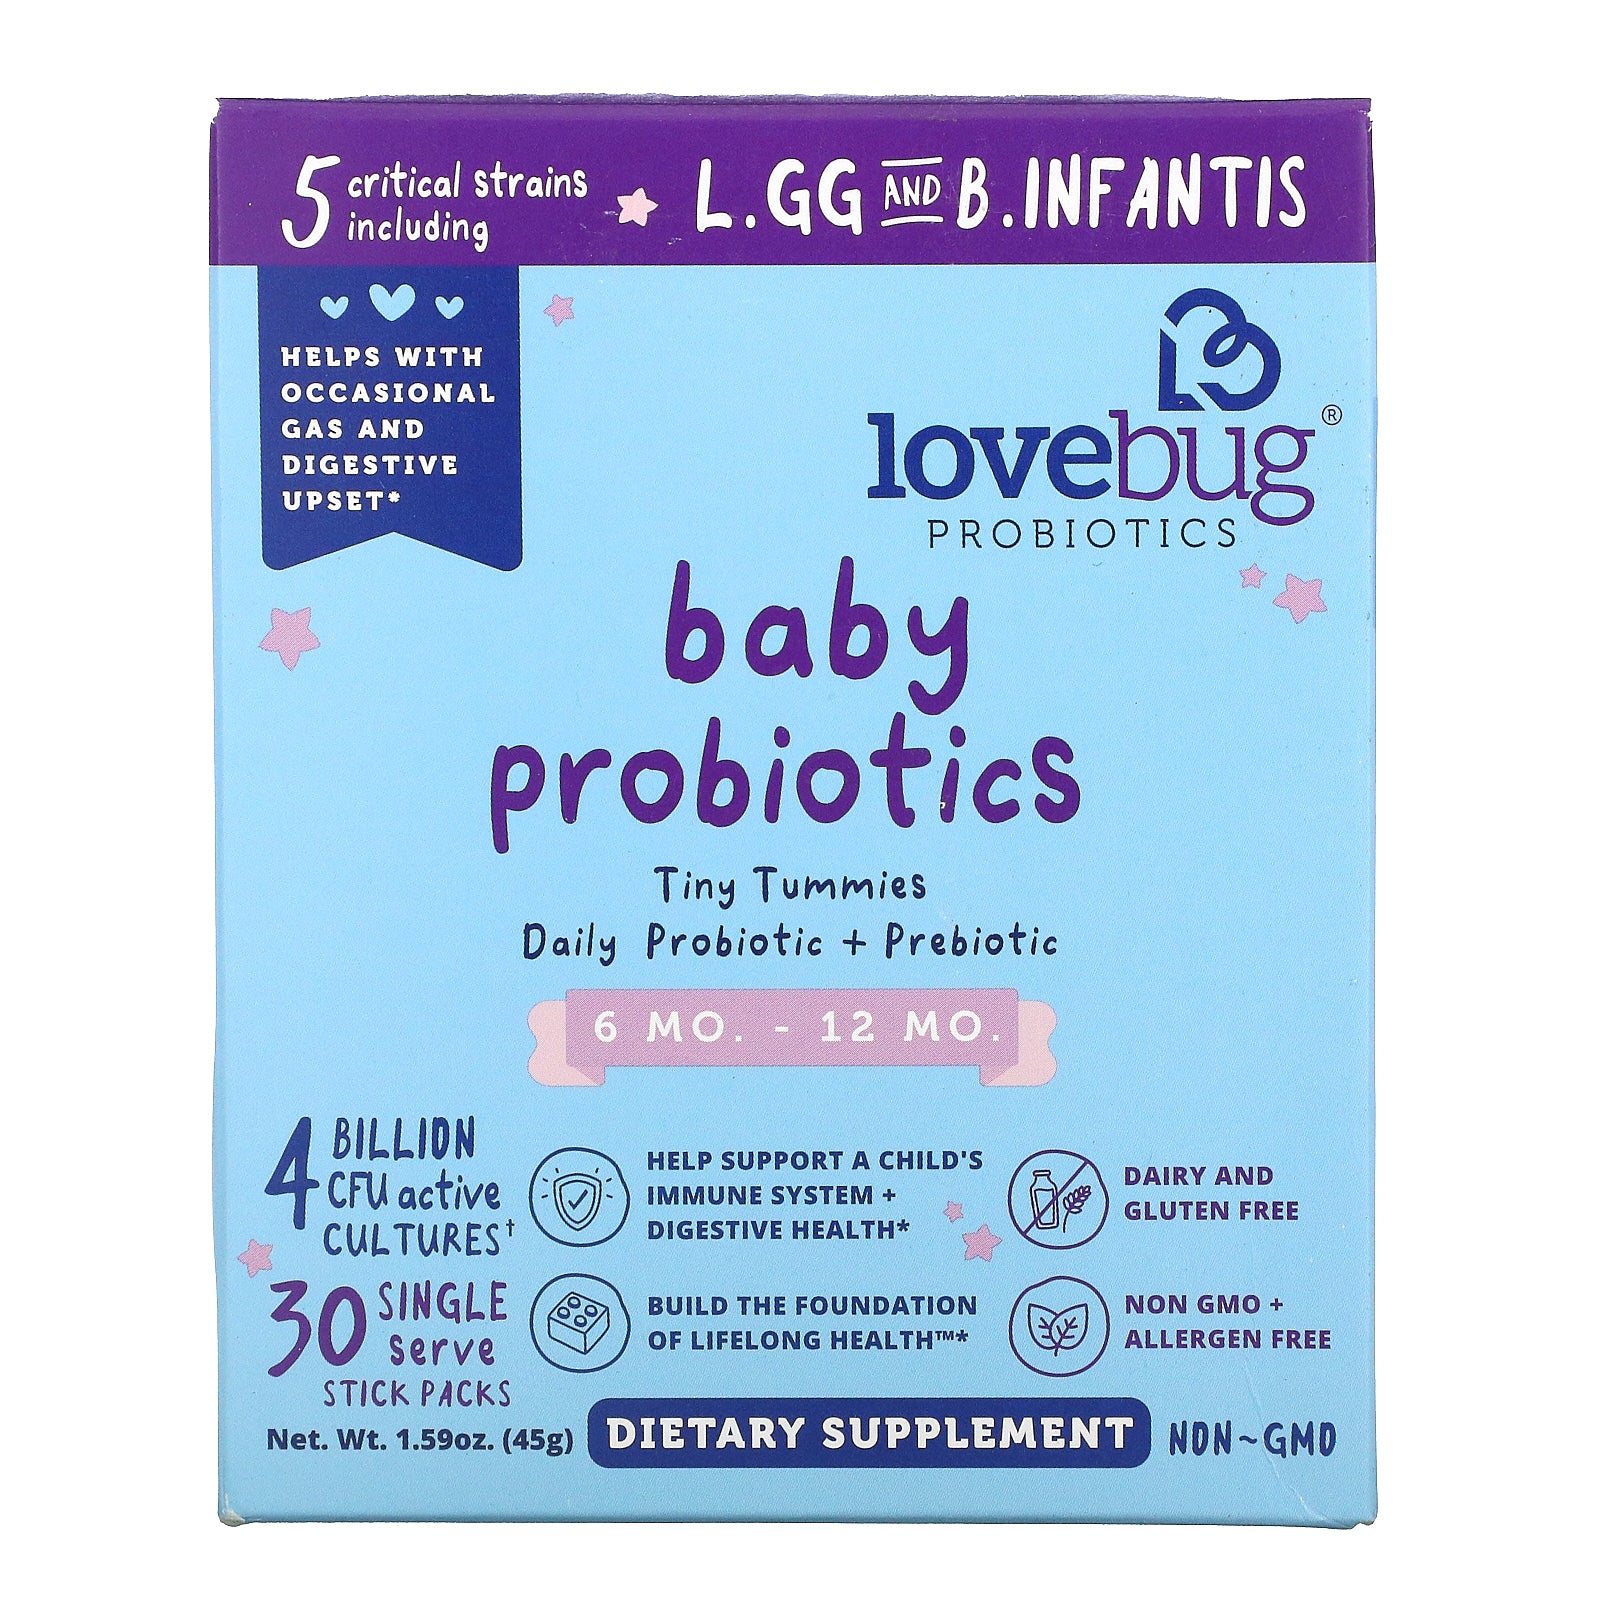 LoveBug, Baby Probiotics, Tiny Tummies Daily Probiotic + Prebiotic, 6-12 Mo., 4 Billion CFU, 30 Single Stick Packs, 0.05 oz (1.5 g)